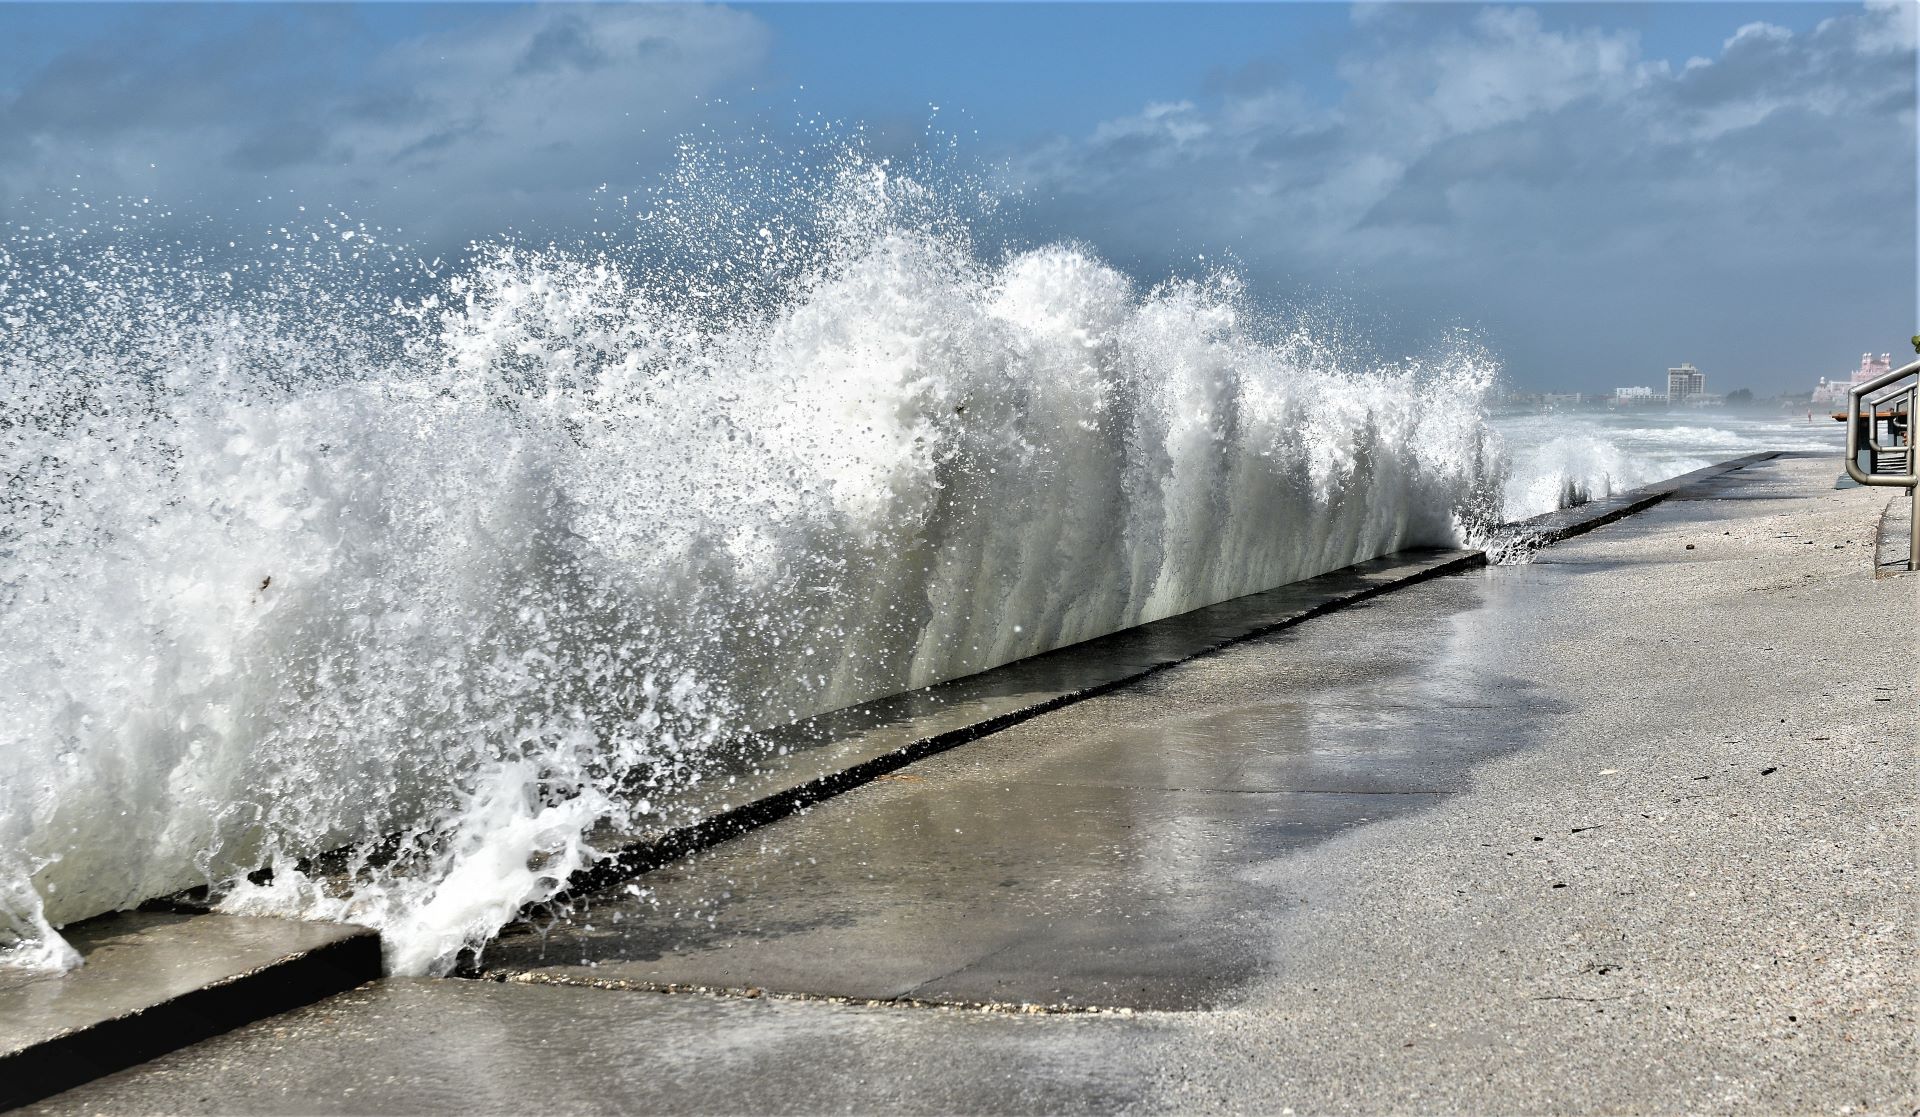 Decorative image showing waves splashing on a pavement